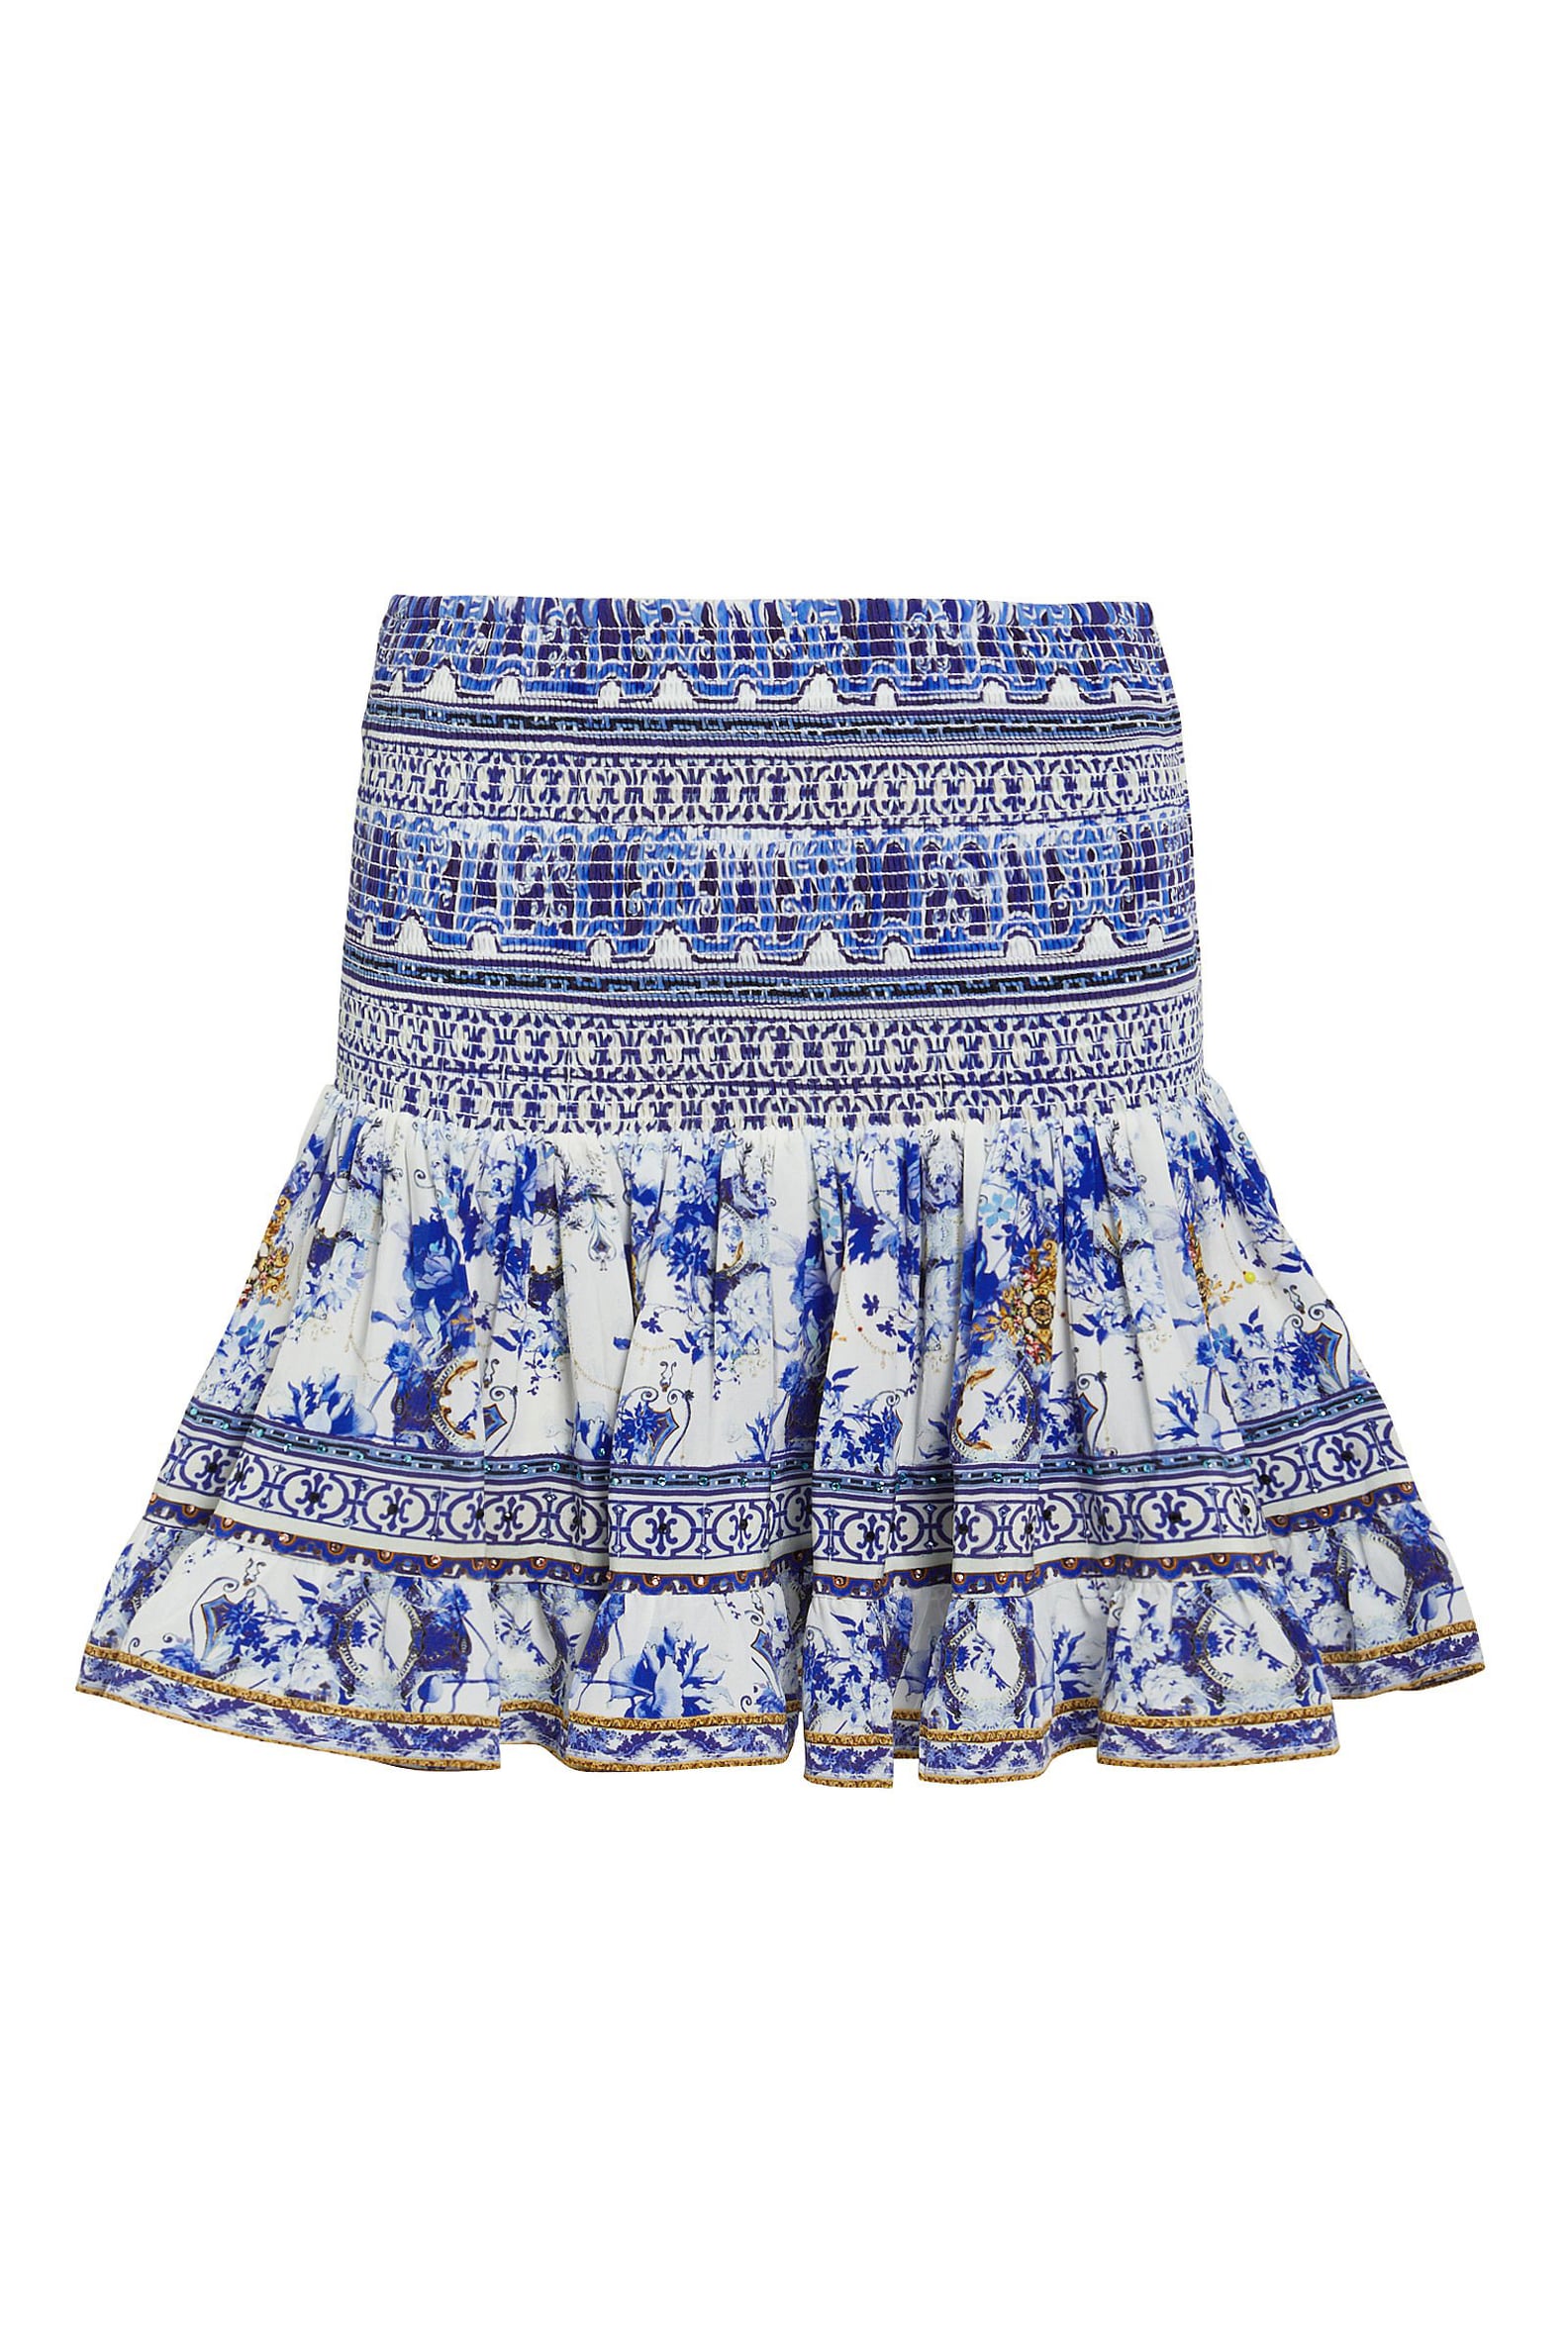 Summer Miniskirt Trend 2019 | POPSUGAR Fashion